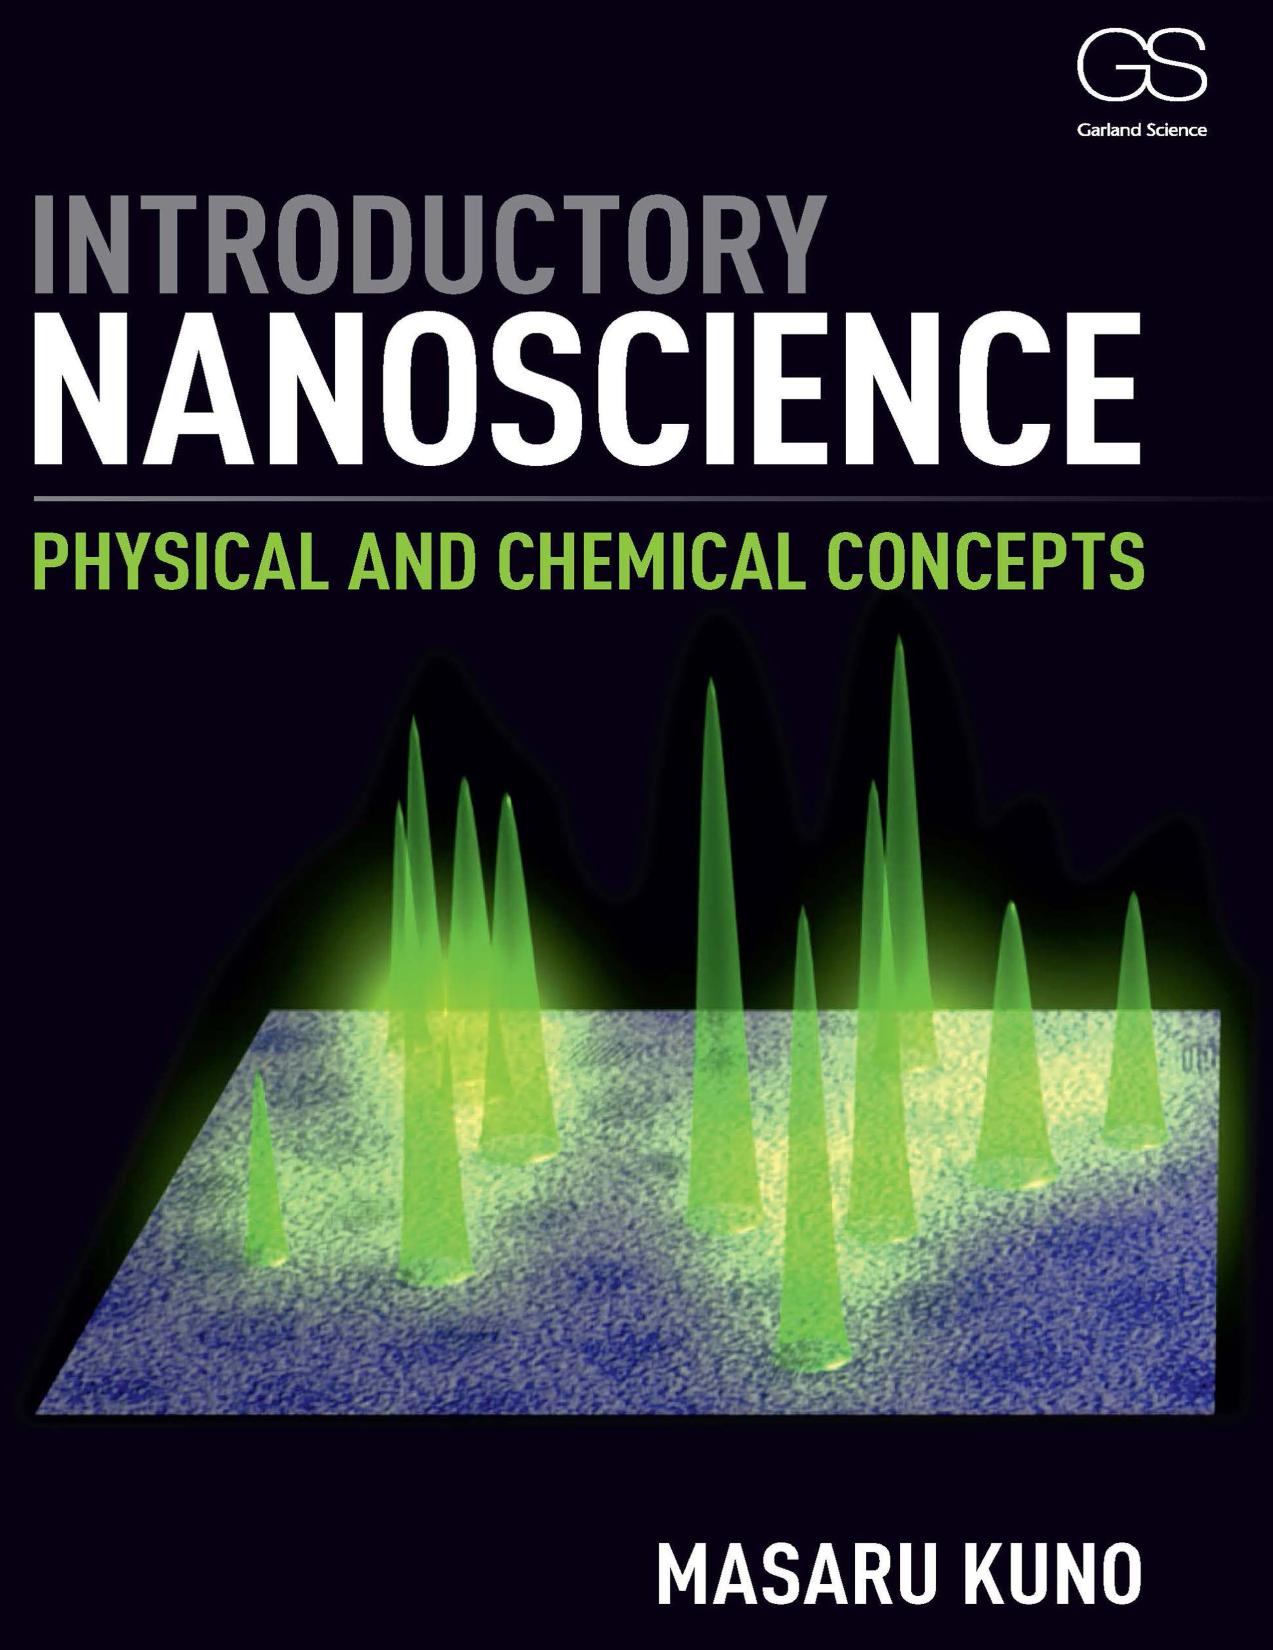 Introductory Nanoscience